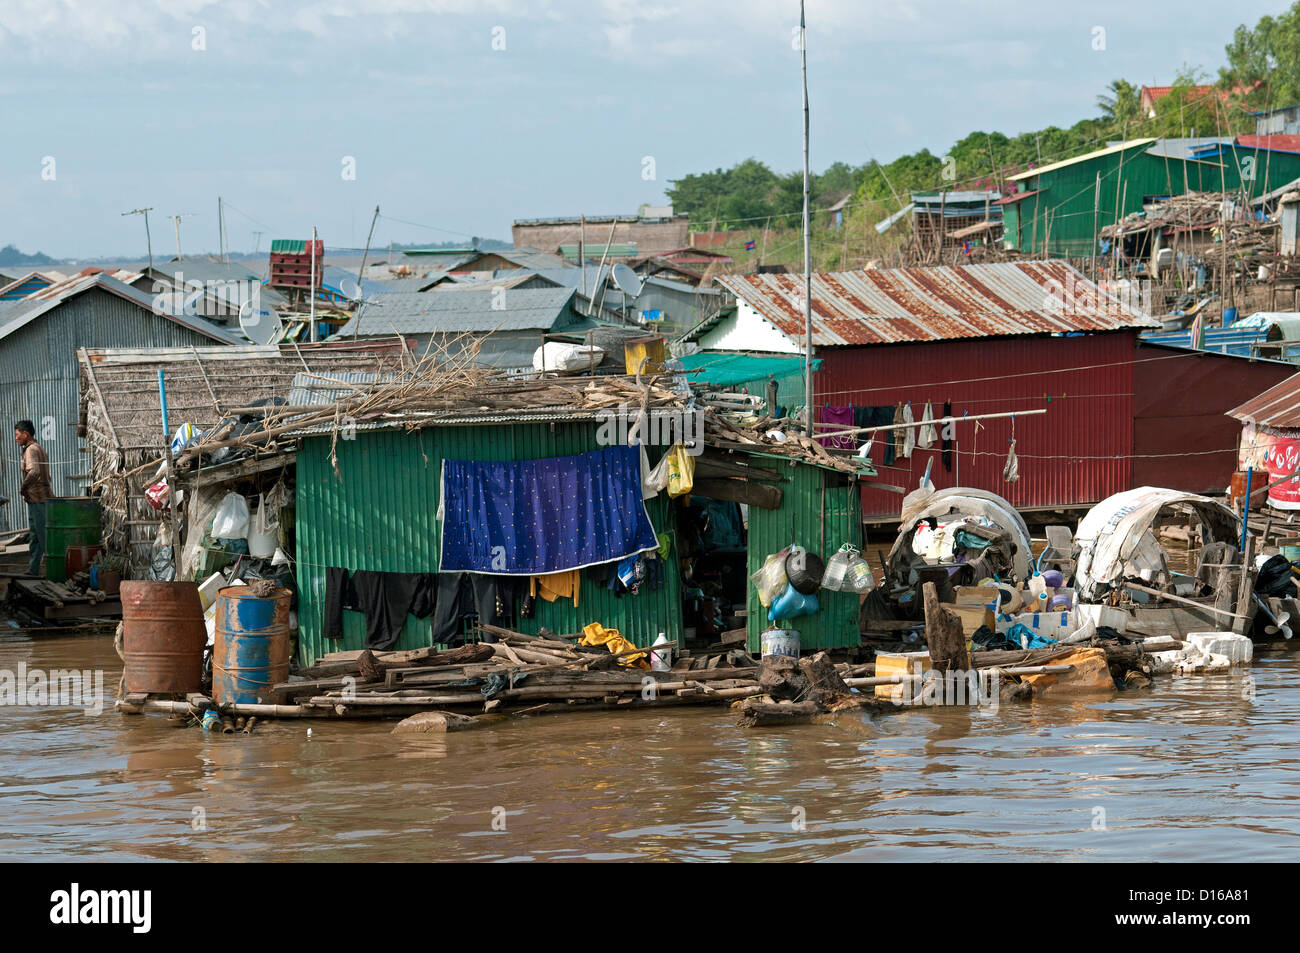 Make-shift huts of a slum area on the bank of the Mekong River, Areyskat near Phnom Penh, Cambodia Stock Photo